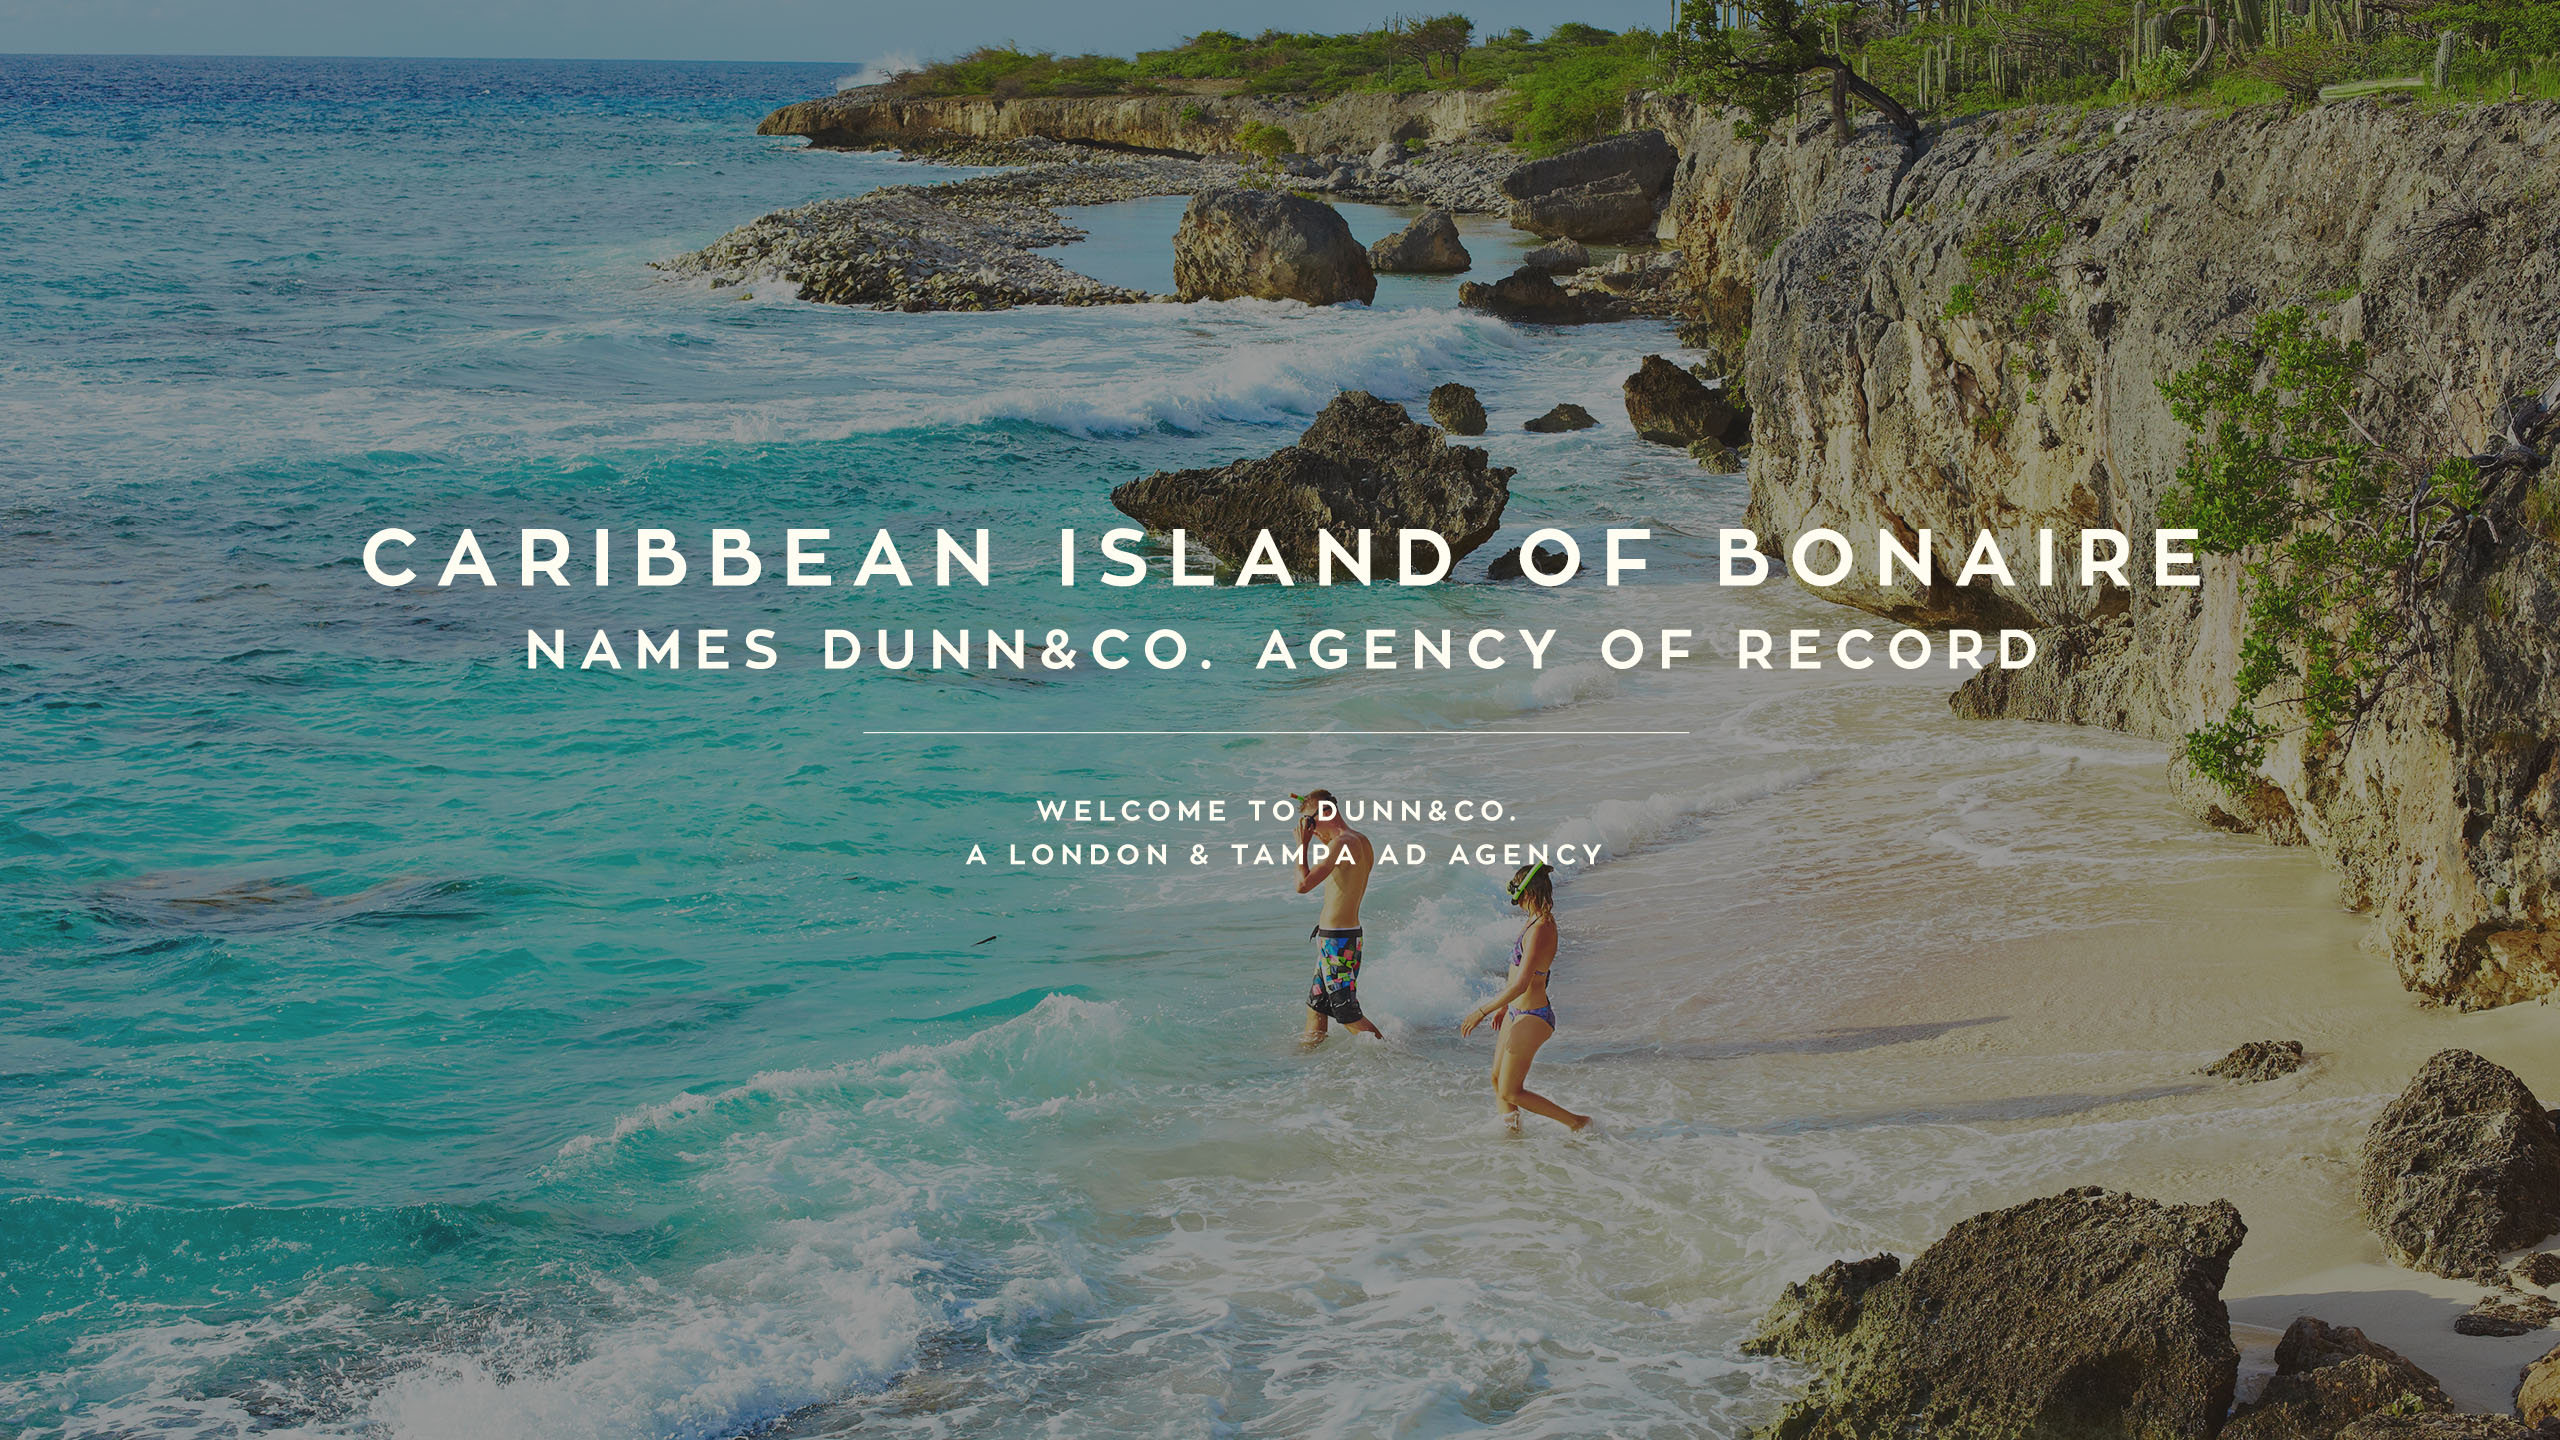 Carribean Island of Bonaire Names Dunn&Co. Agency of Record